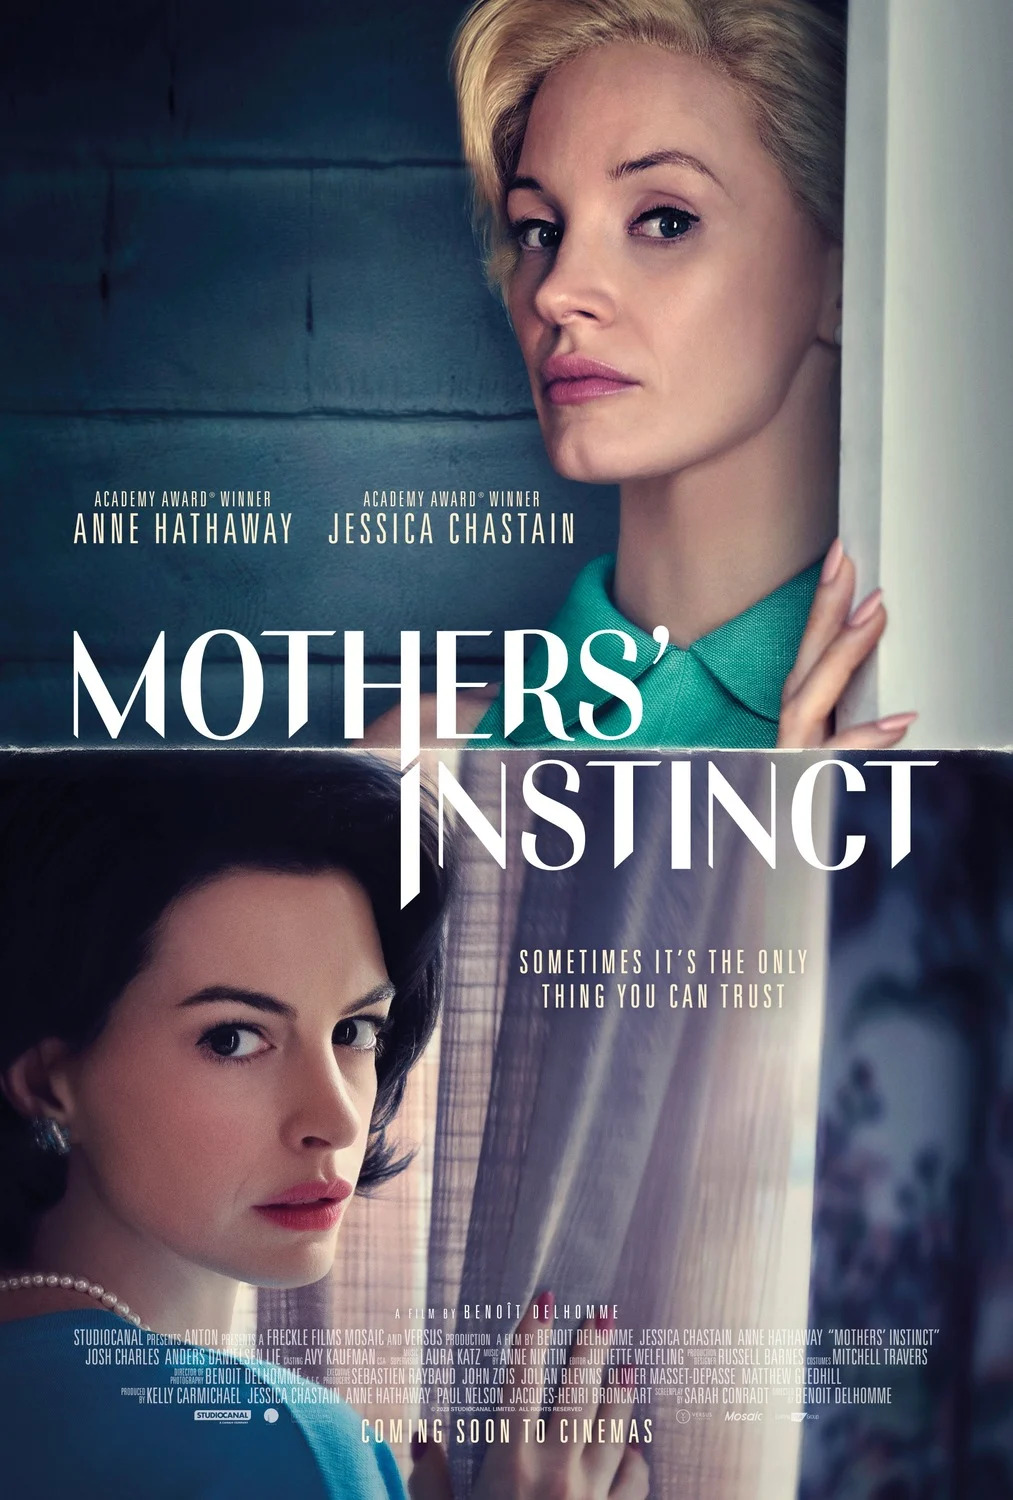 Mothers Instinct Trailer & Poster 2